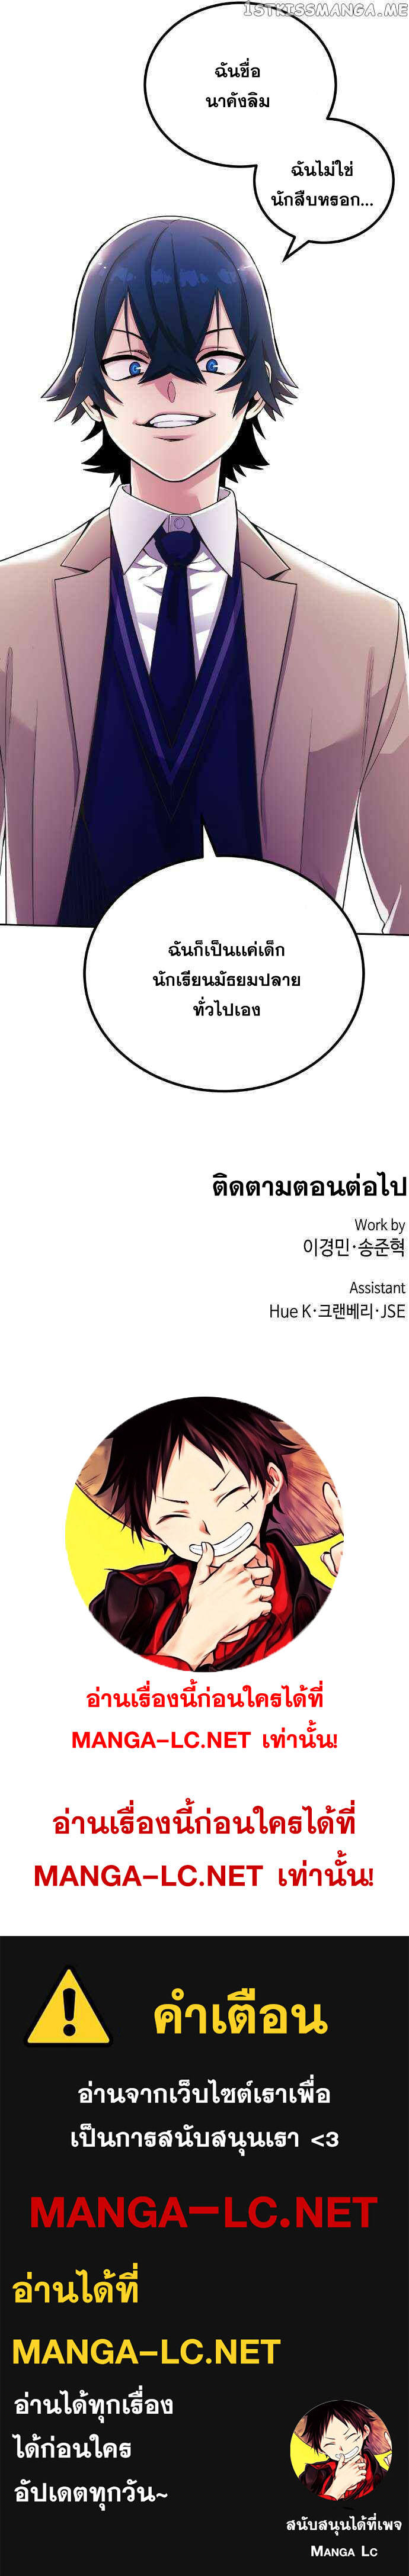 Webtoon Character Na Kang Lim ร ยธโ€ขร ยธยญร ยธโขร ยธโ€”ร ยธยตร ยนห 25 (11)